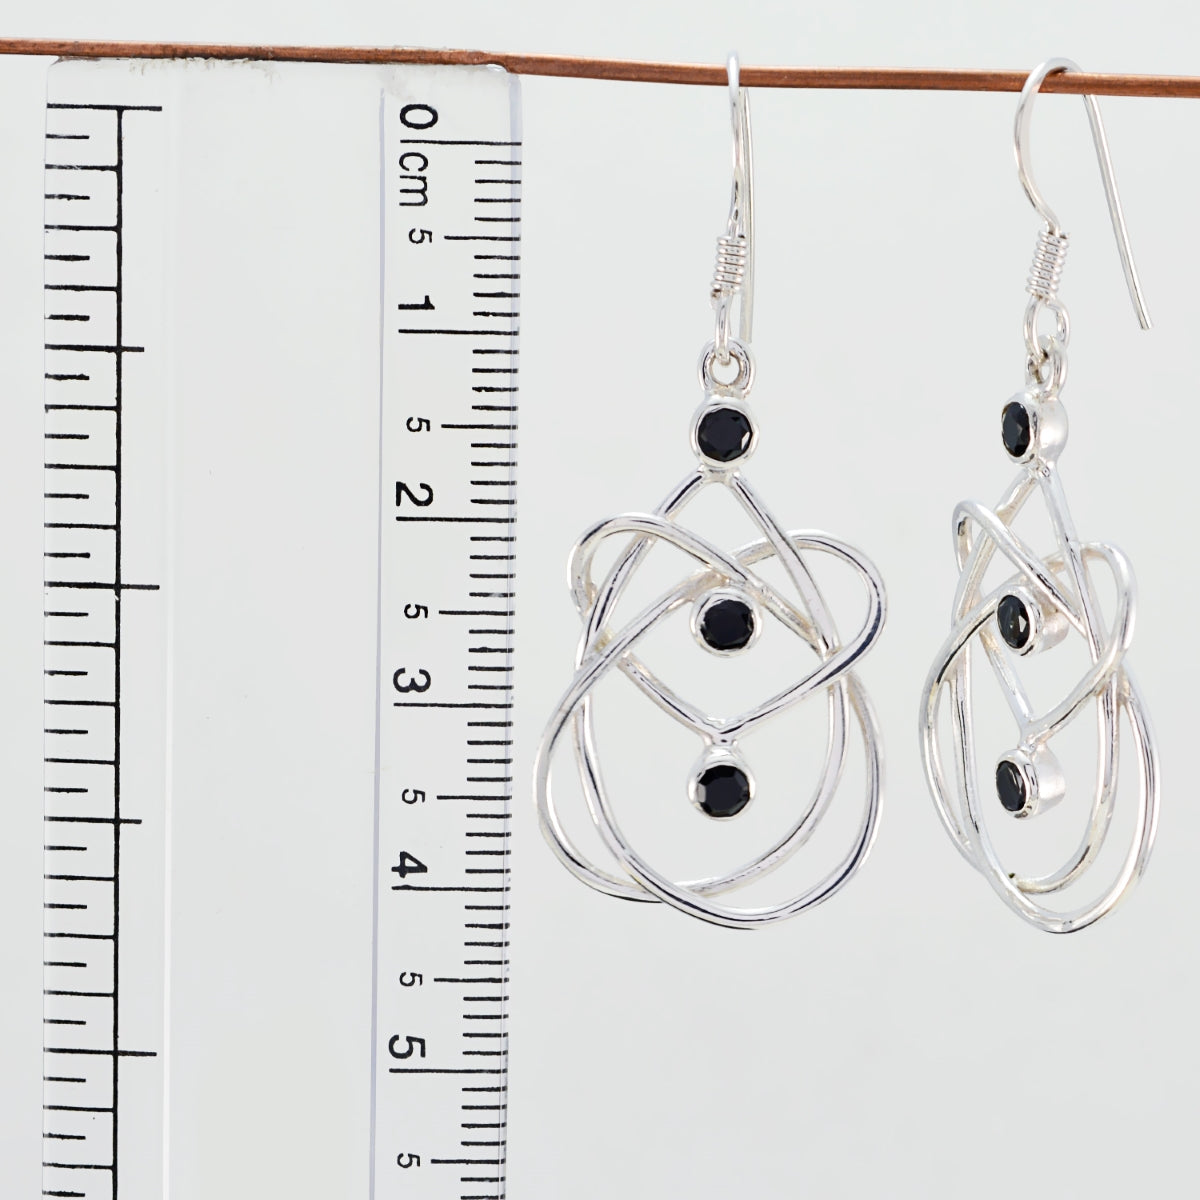 Riyo Nice Gemstone round Faceted Black Onyx Silver Earrings gift for handmade